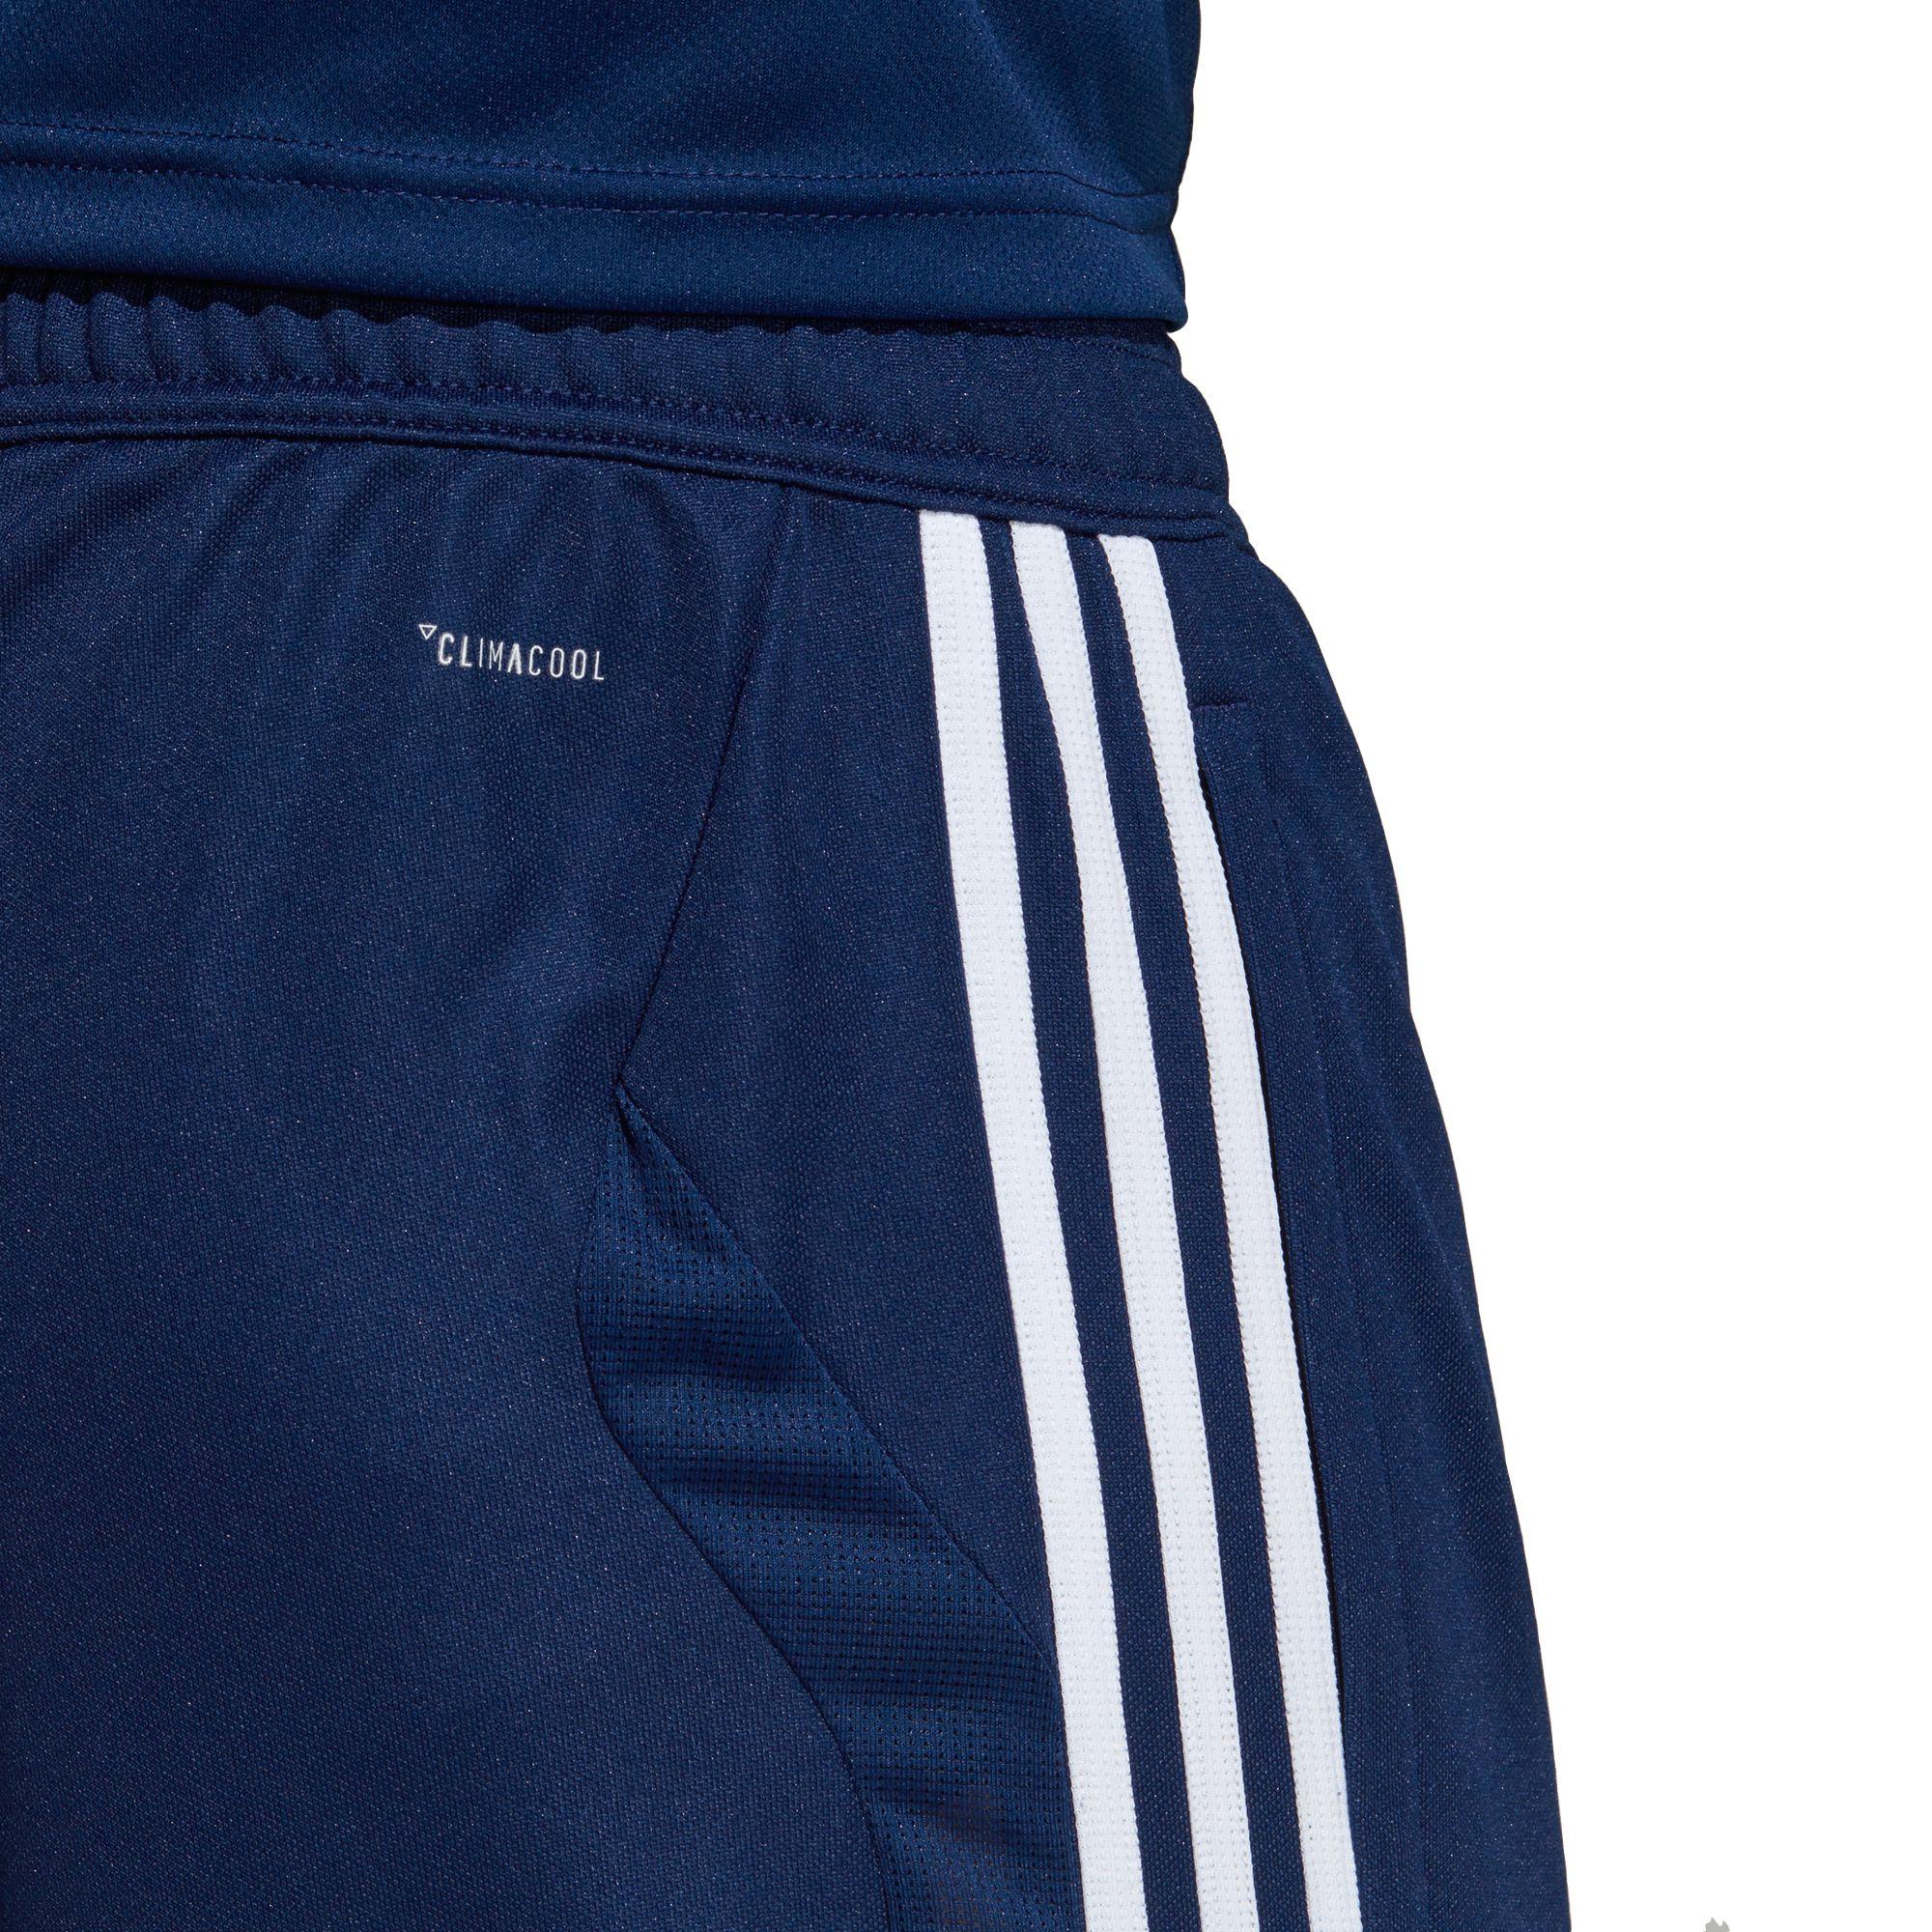 Adidas Tiro 19 Training Pants In Darkbluewhite Blue -4463